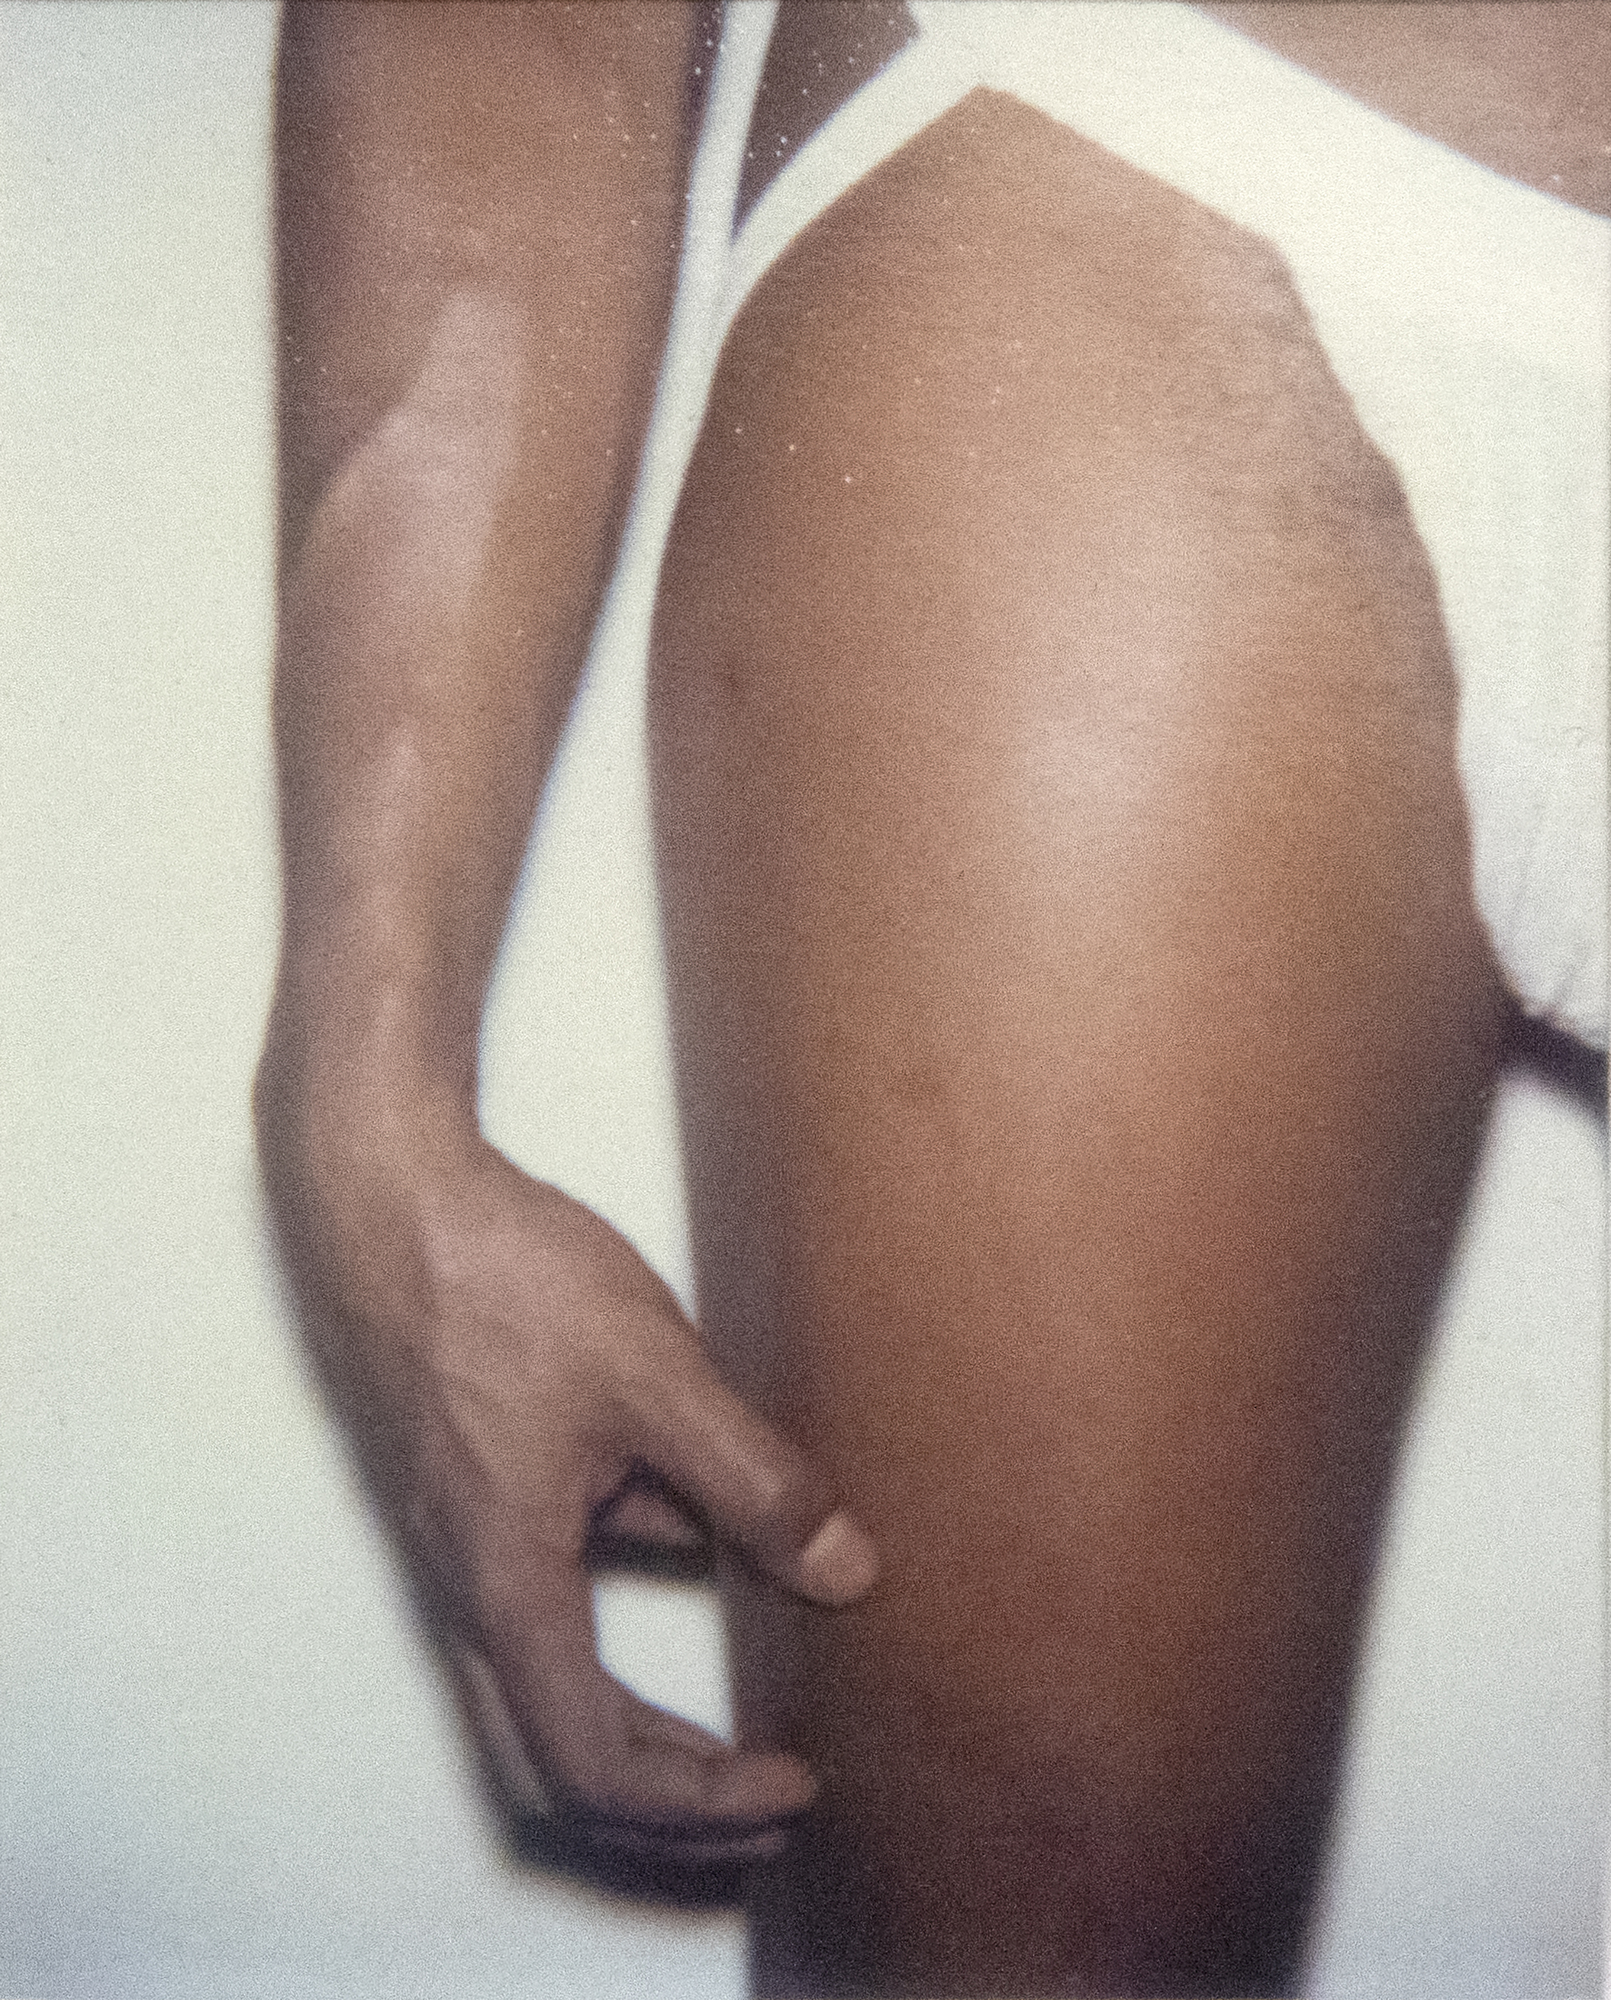 ANDY WARHOL - Jean-Michel Basquiat Six Polaroids - Polaroid, Polacolor - 4 1/4 x 3 1/2 in. ea.